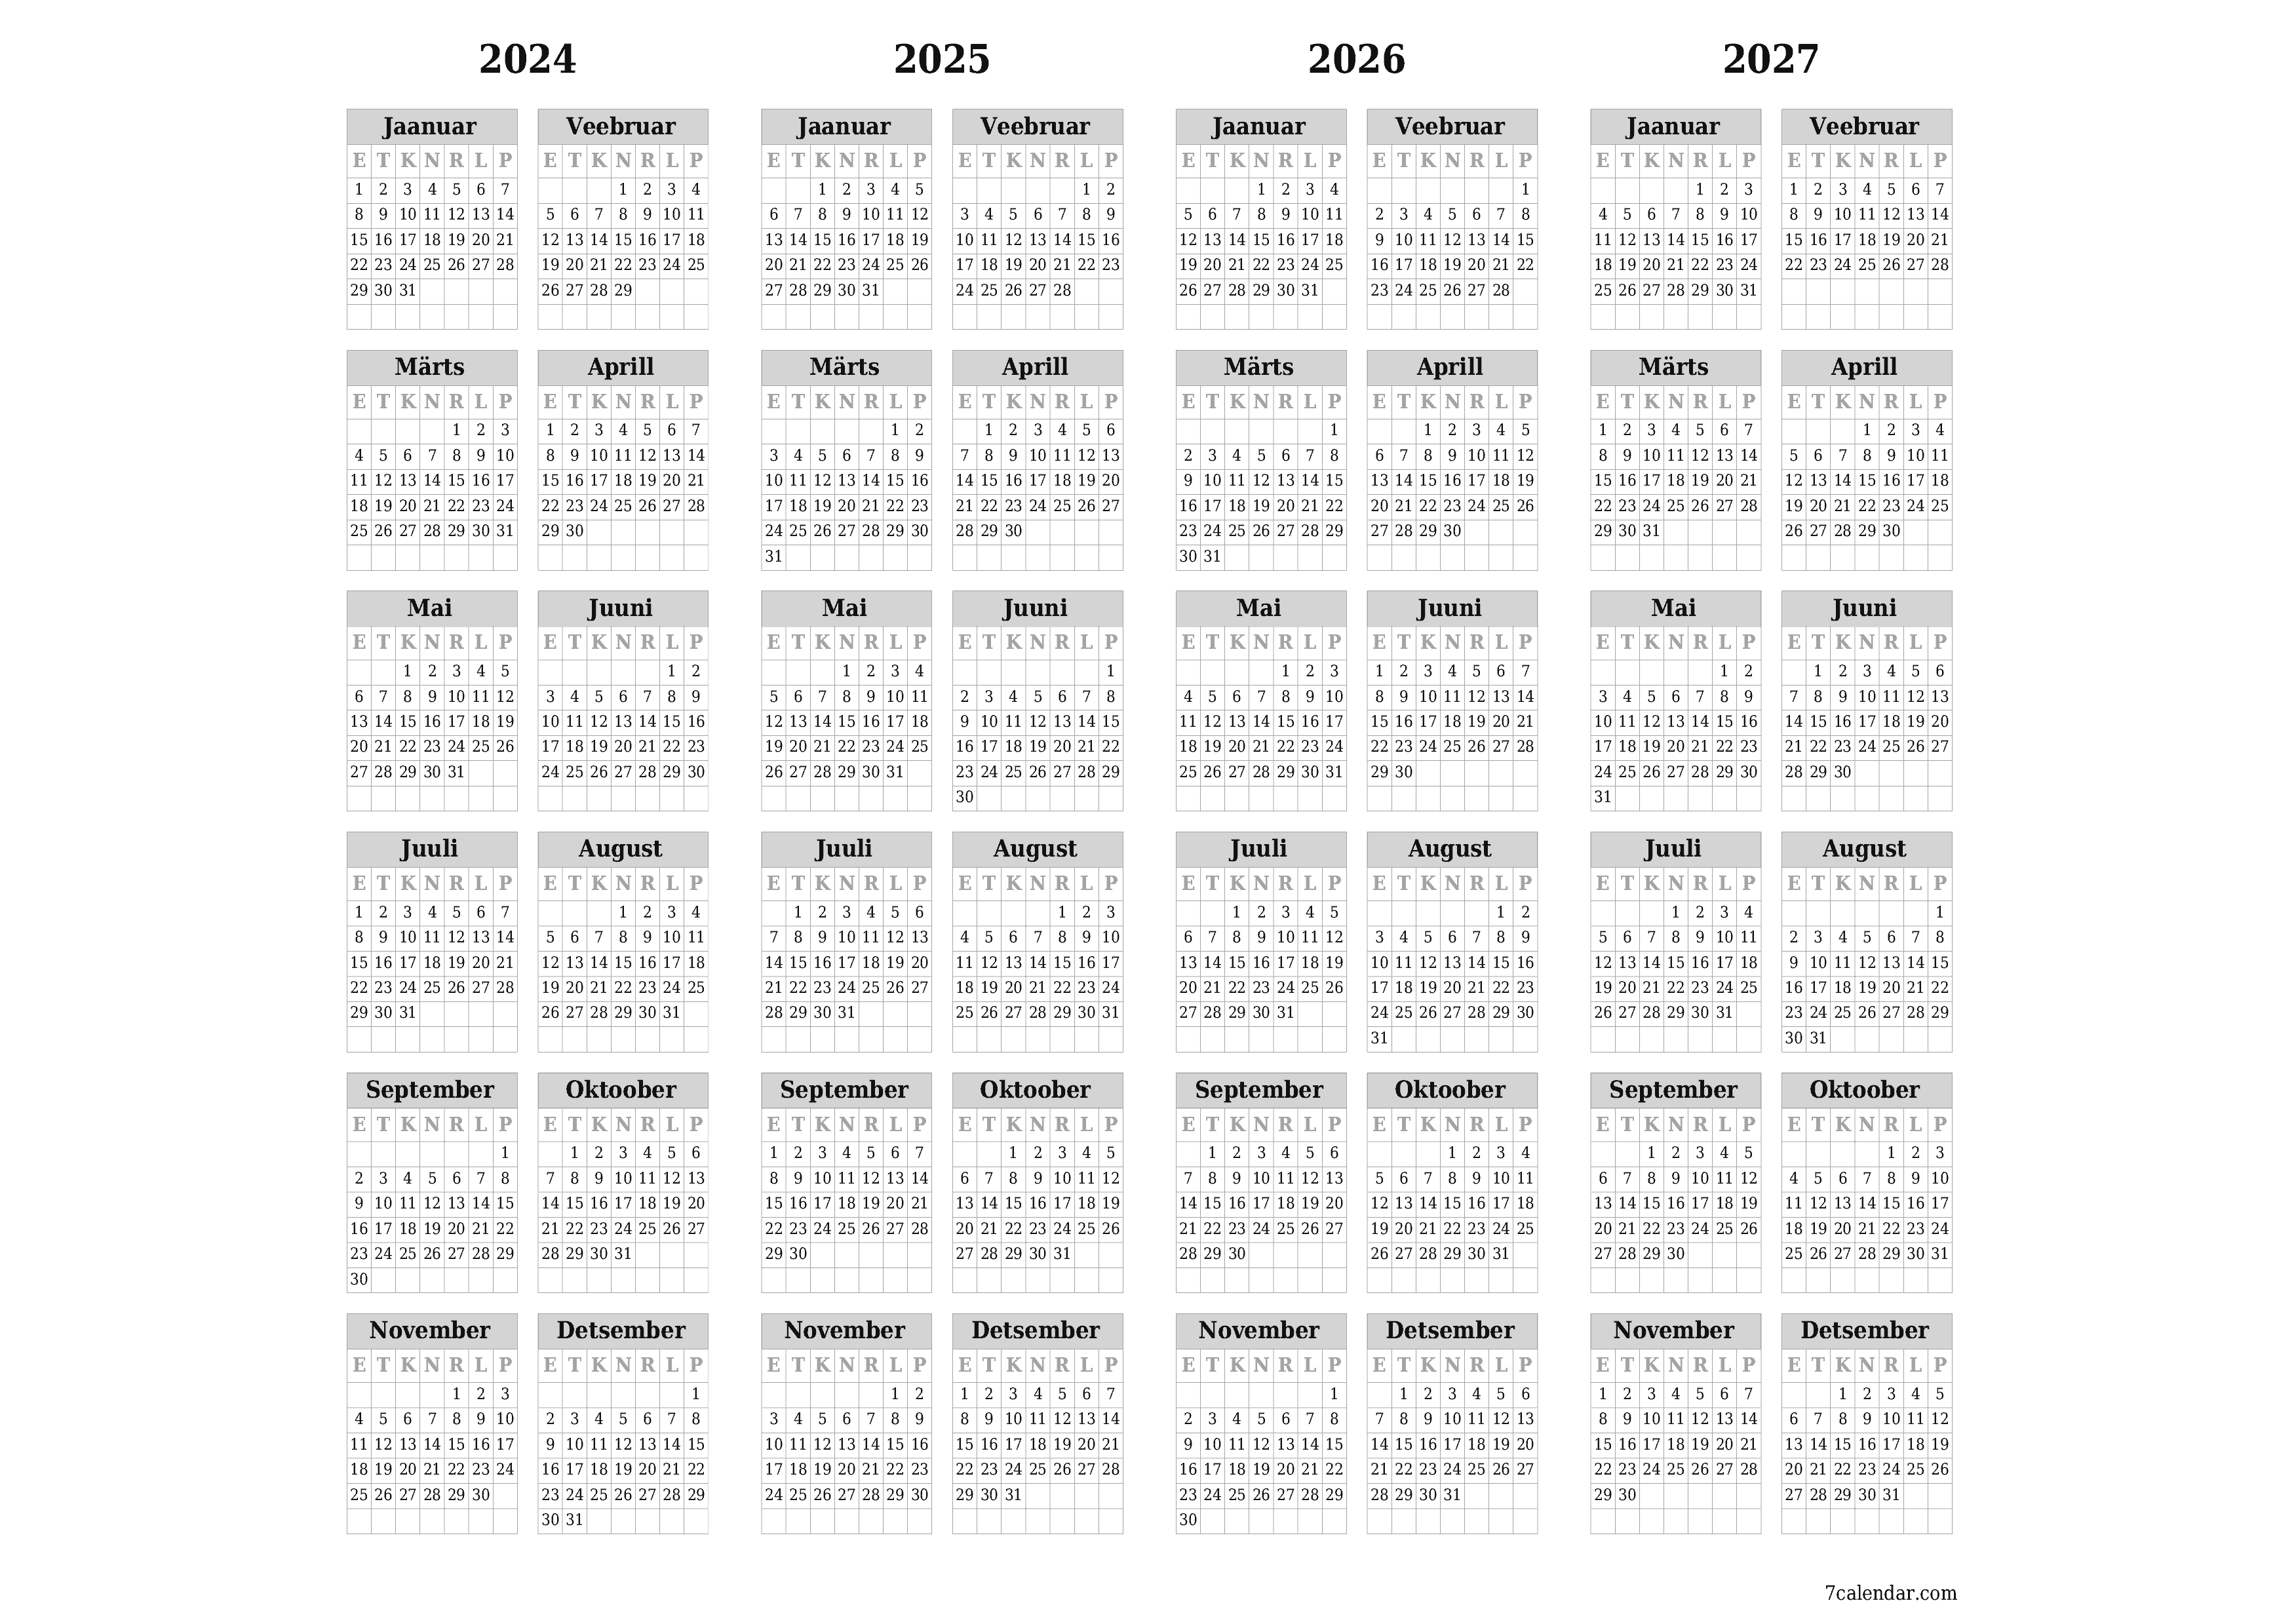 prinditav seina kalendri mall tasuta horisontaalne Iga-aastane kalender Detsember (Dets) 2024